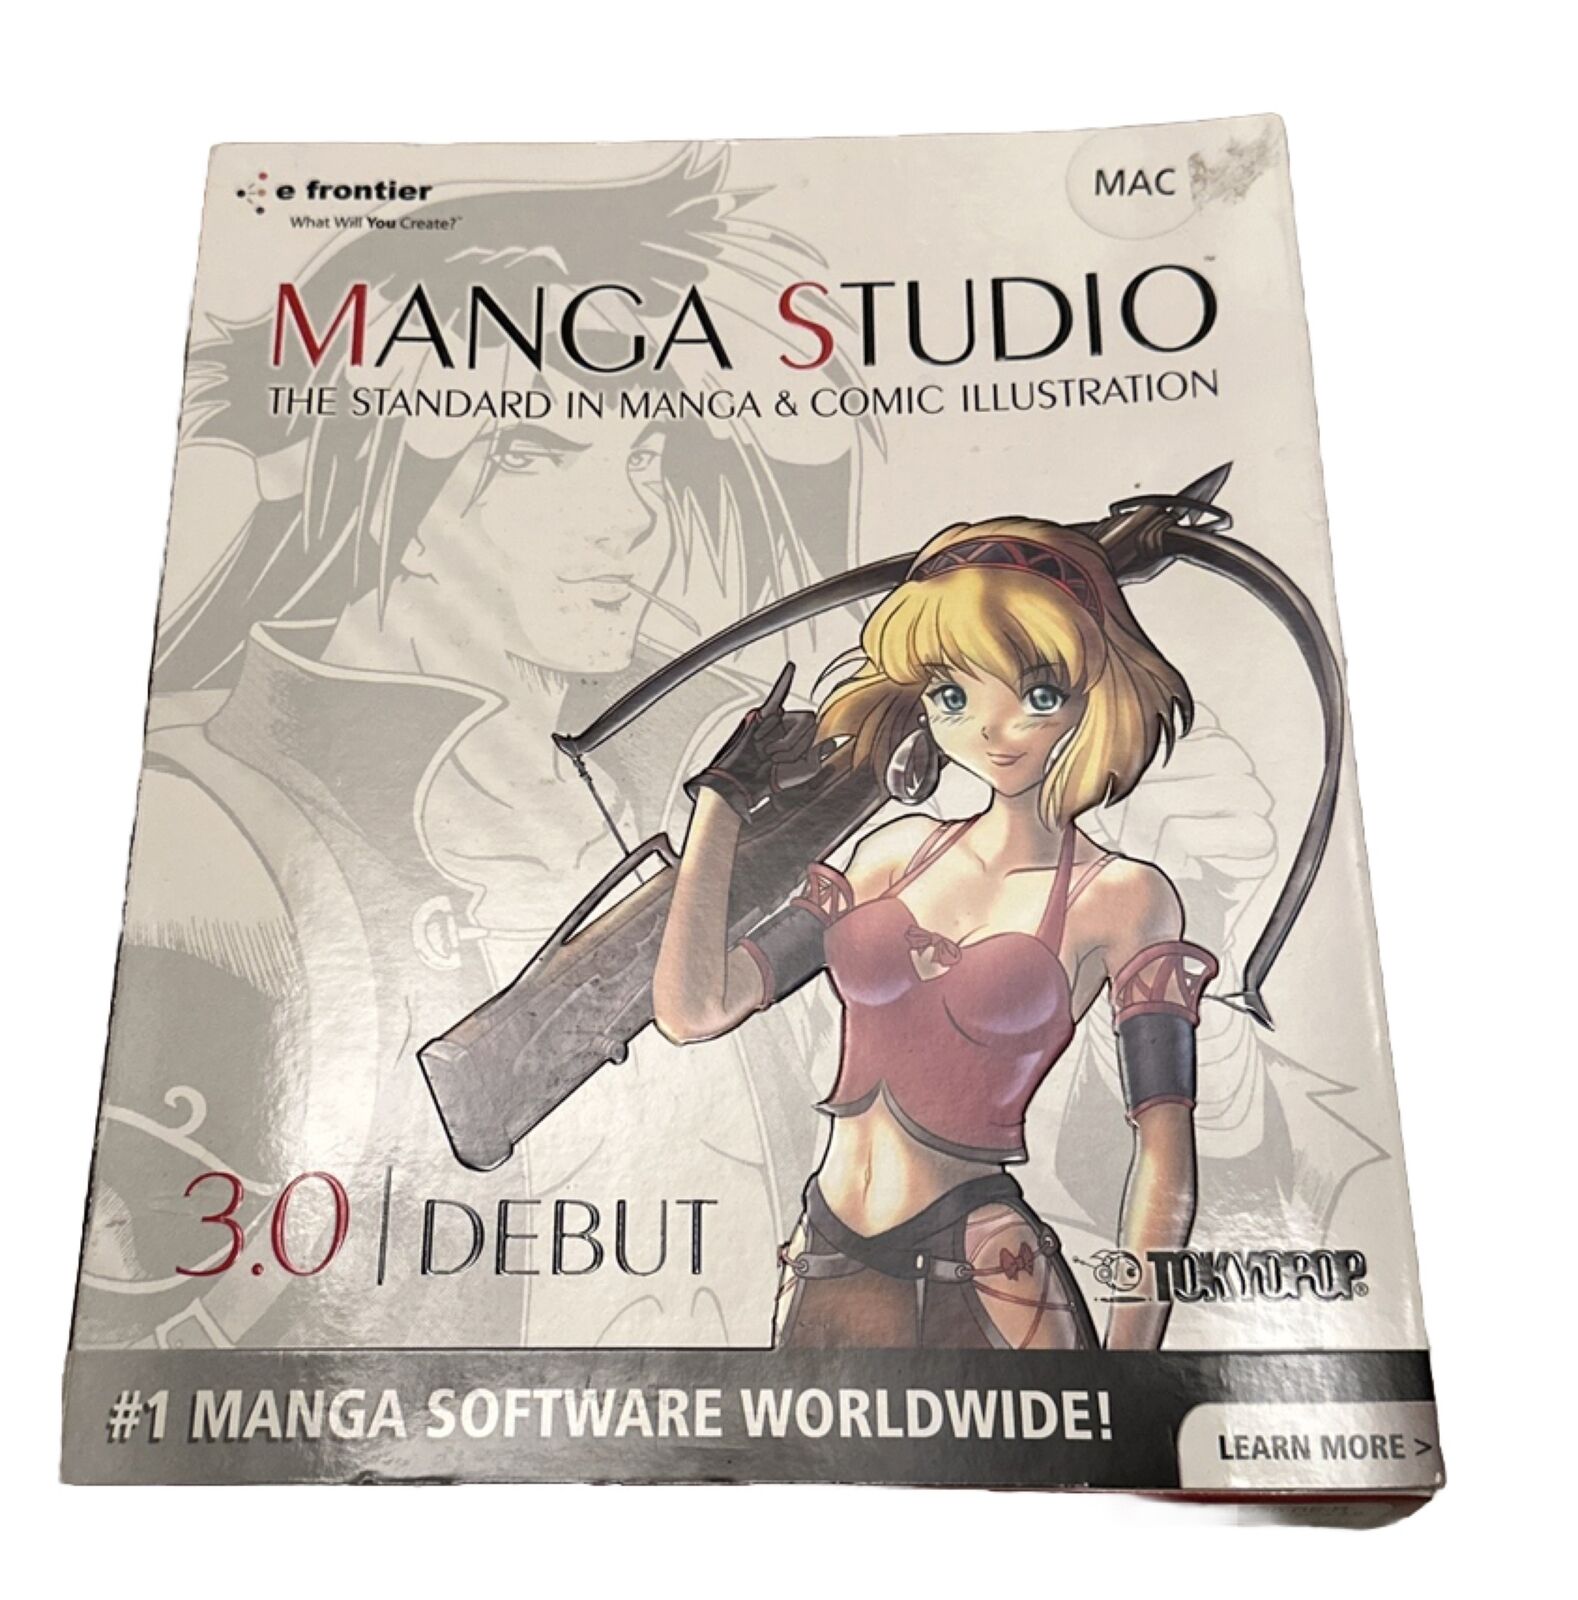 Manga Studio 3.0 Debut.  Windows.  e-frontier, 2006. OPEN BOX